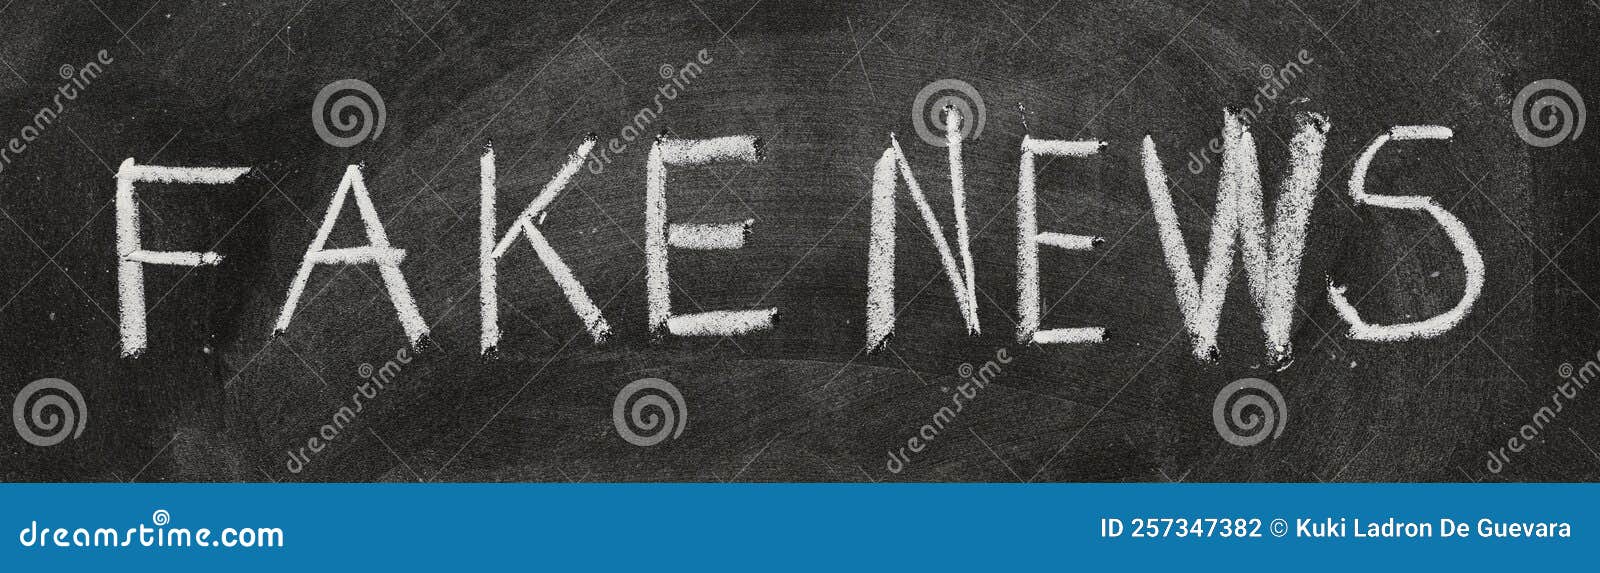 fake news written with chalk on blackboard